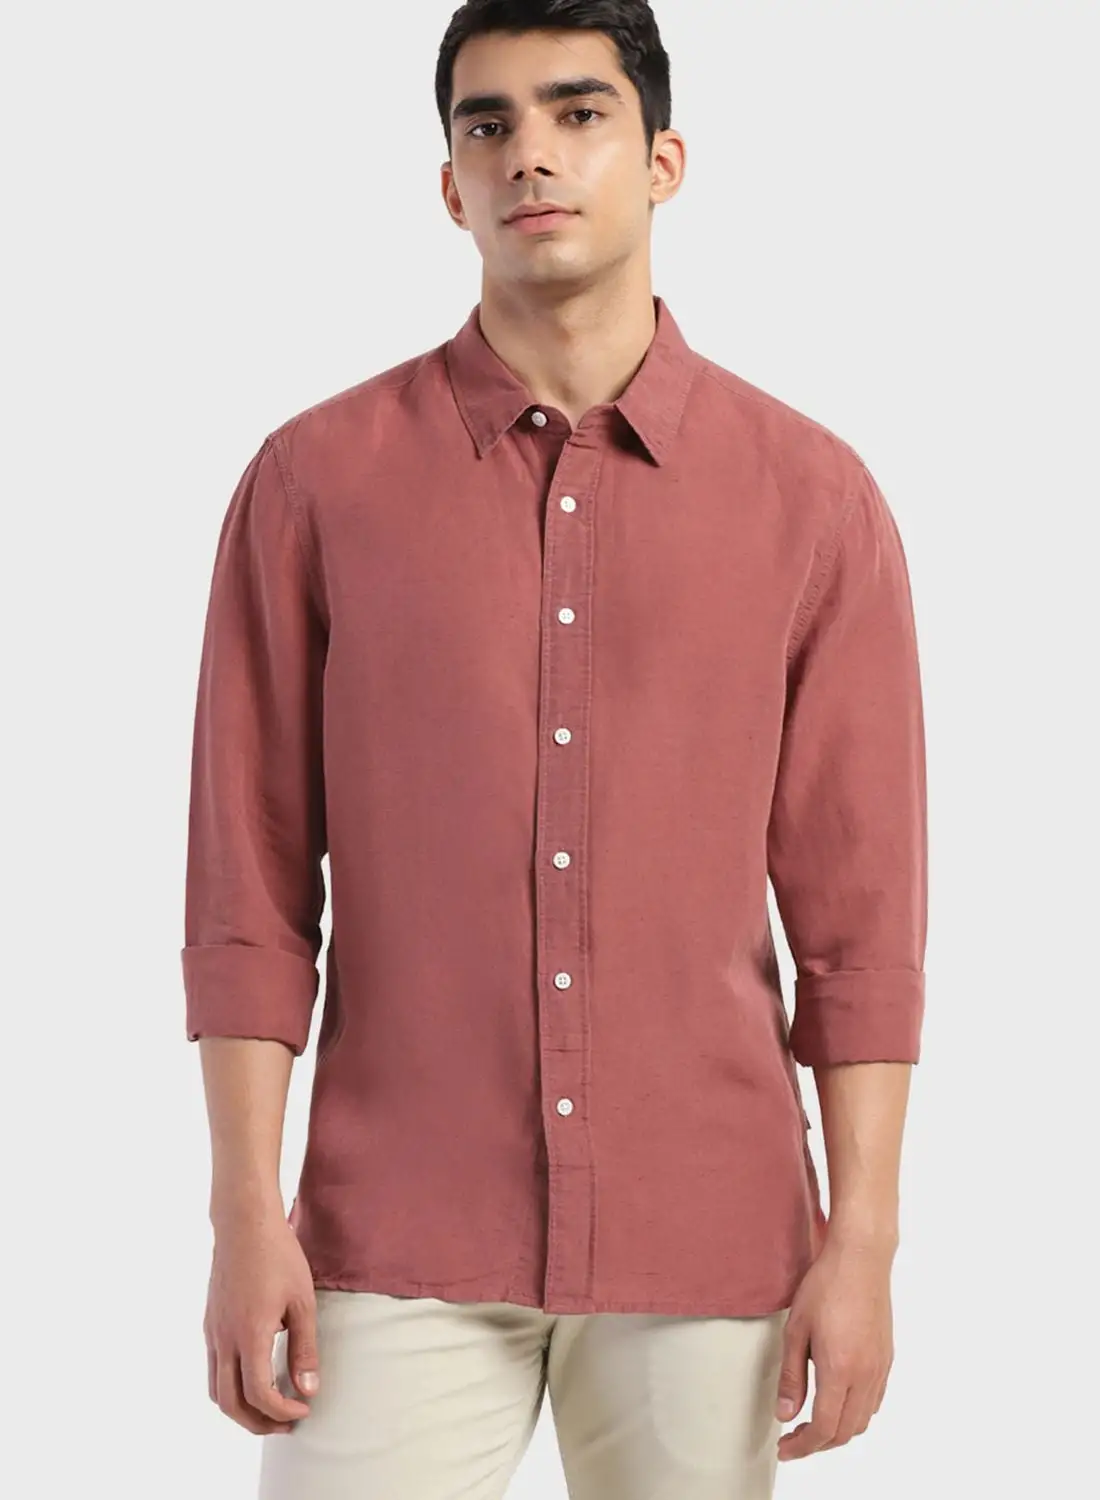 Levi's Essential Slim Fit Shirt